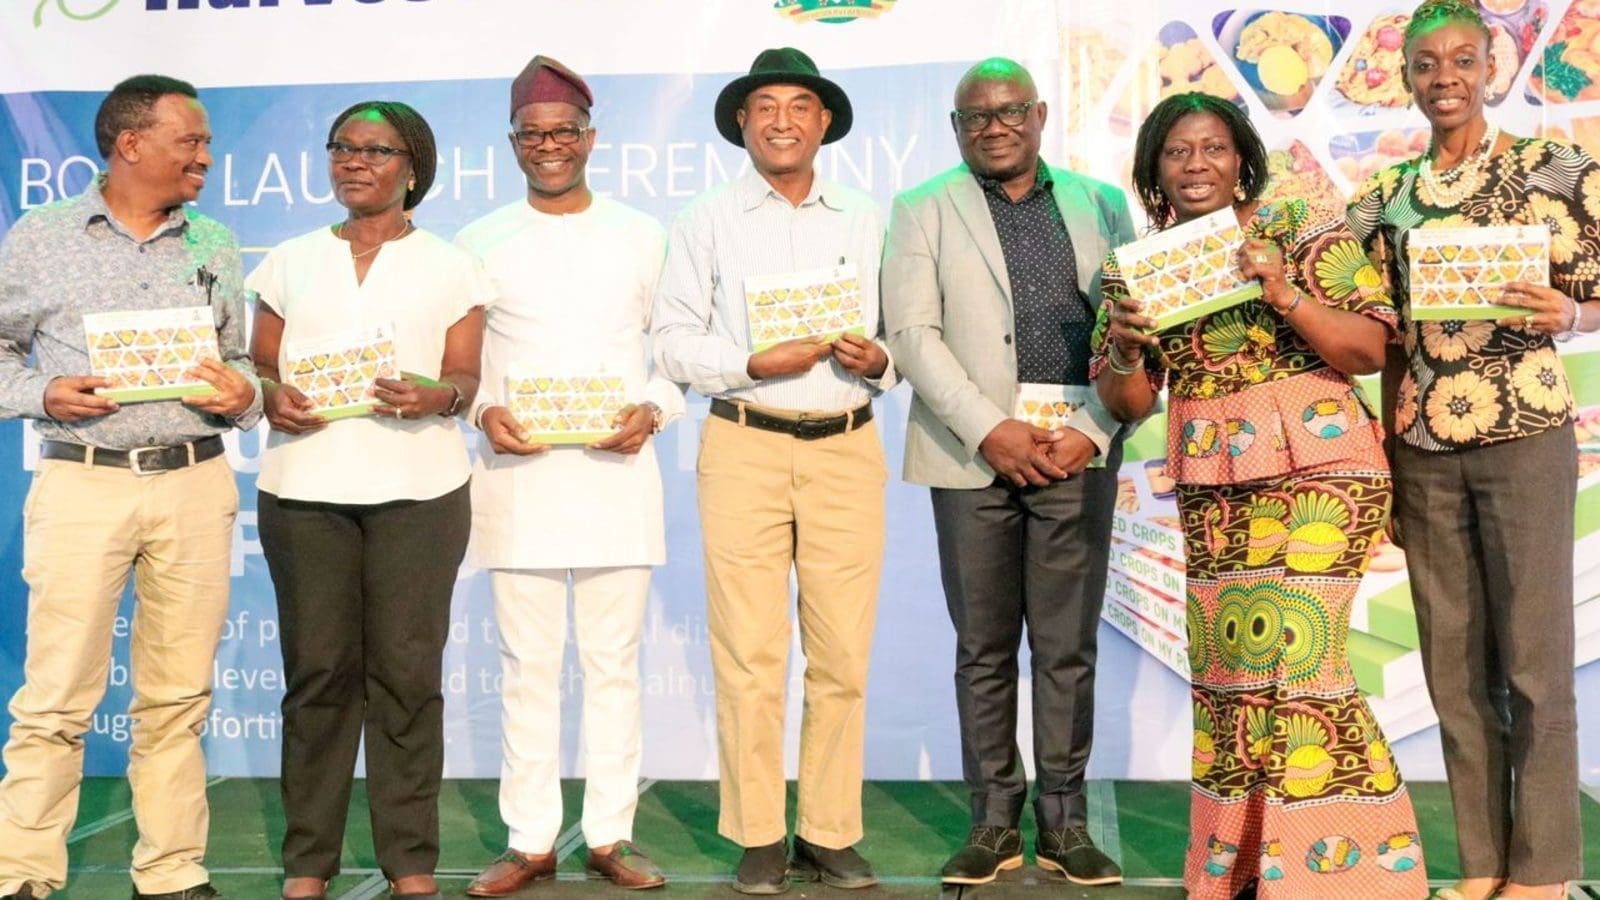 Harvestplus Nigeria, Nigeria government unveil national Biofortification Recipe guide to address malnutrition